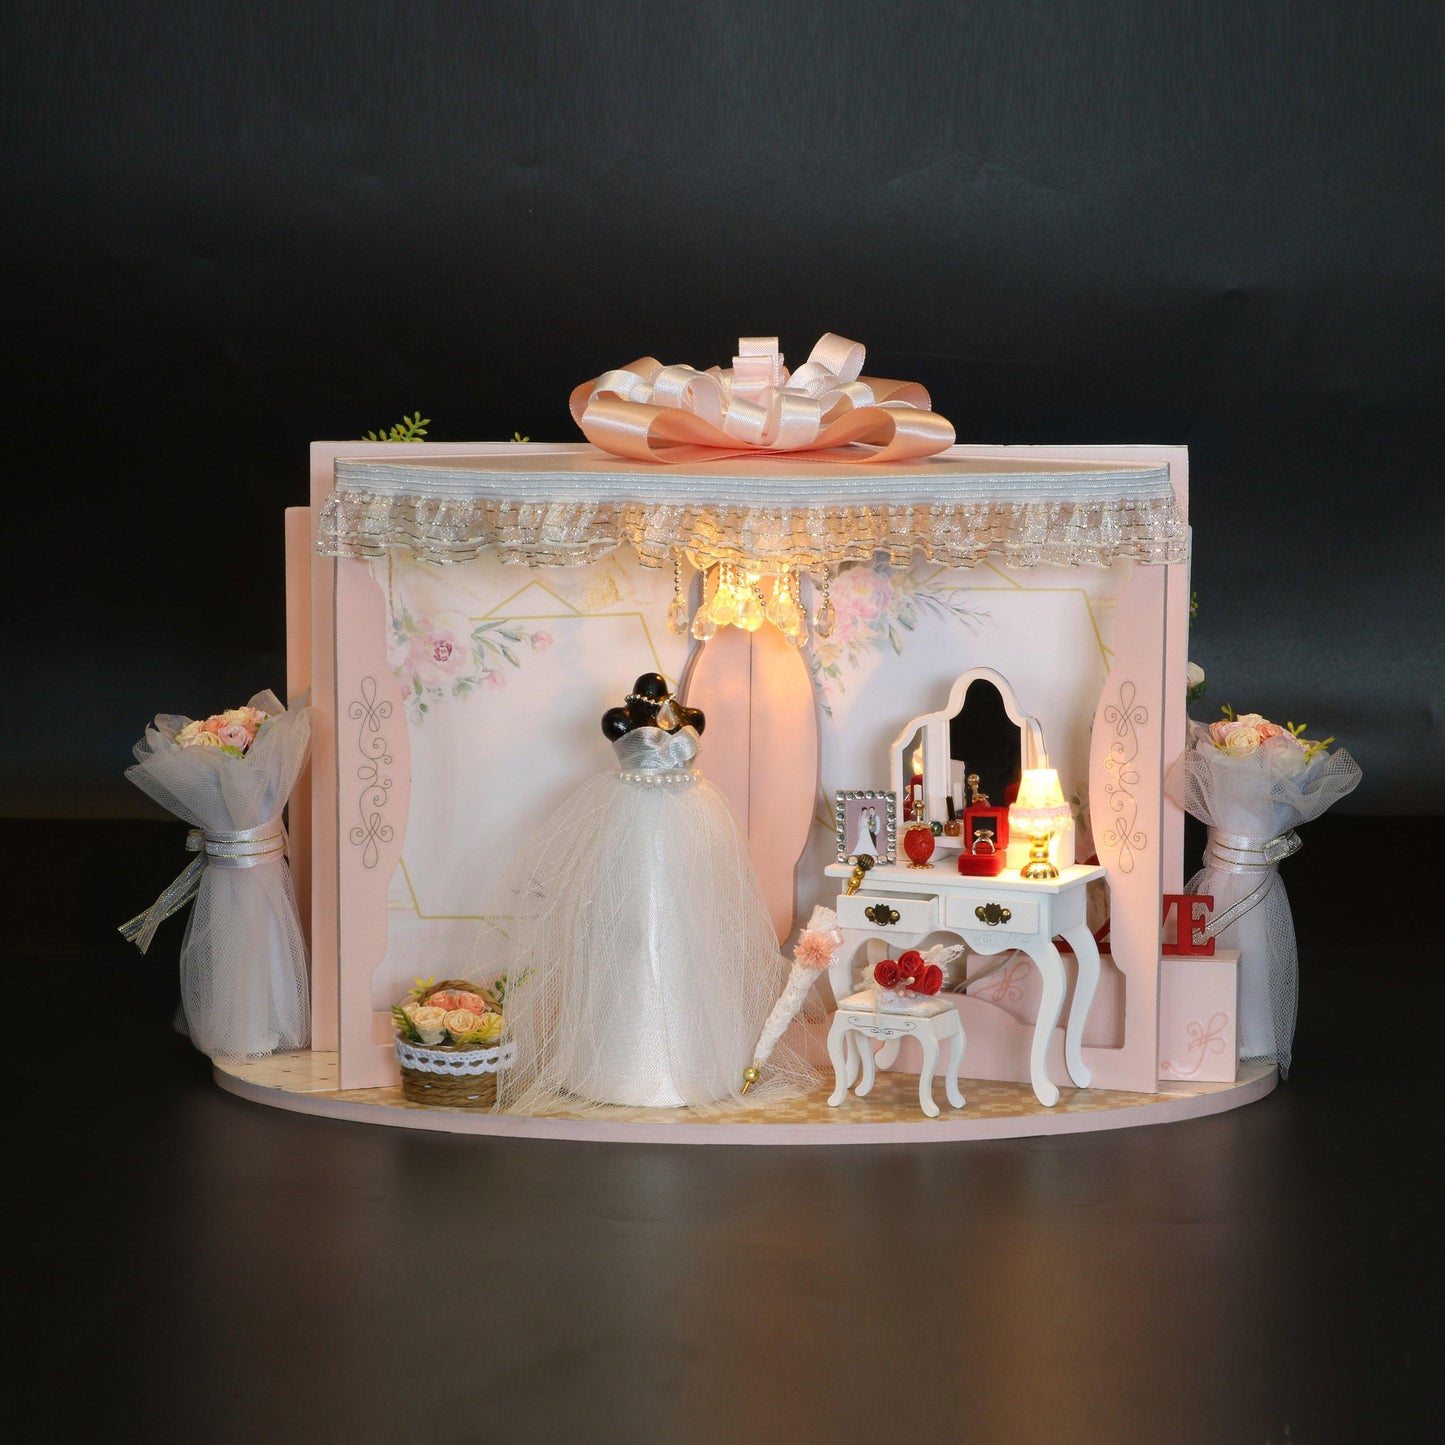 DIY Dollhouse Kit - 2 In 1 Wedding Scenery Miniature Marriage Dollhouse - Wedding Dollhouse Gifts - Wedding Gifts Bride Groom Gifts Birthday